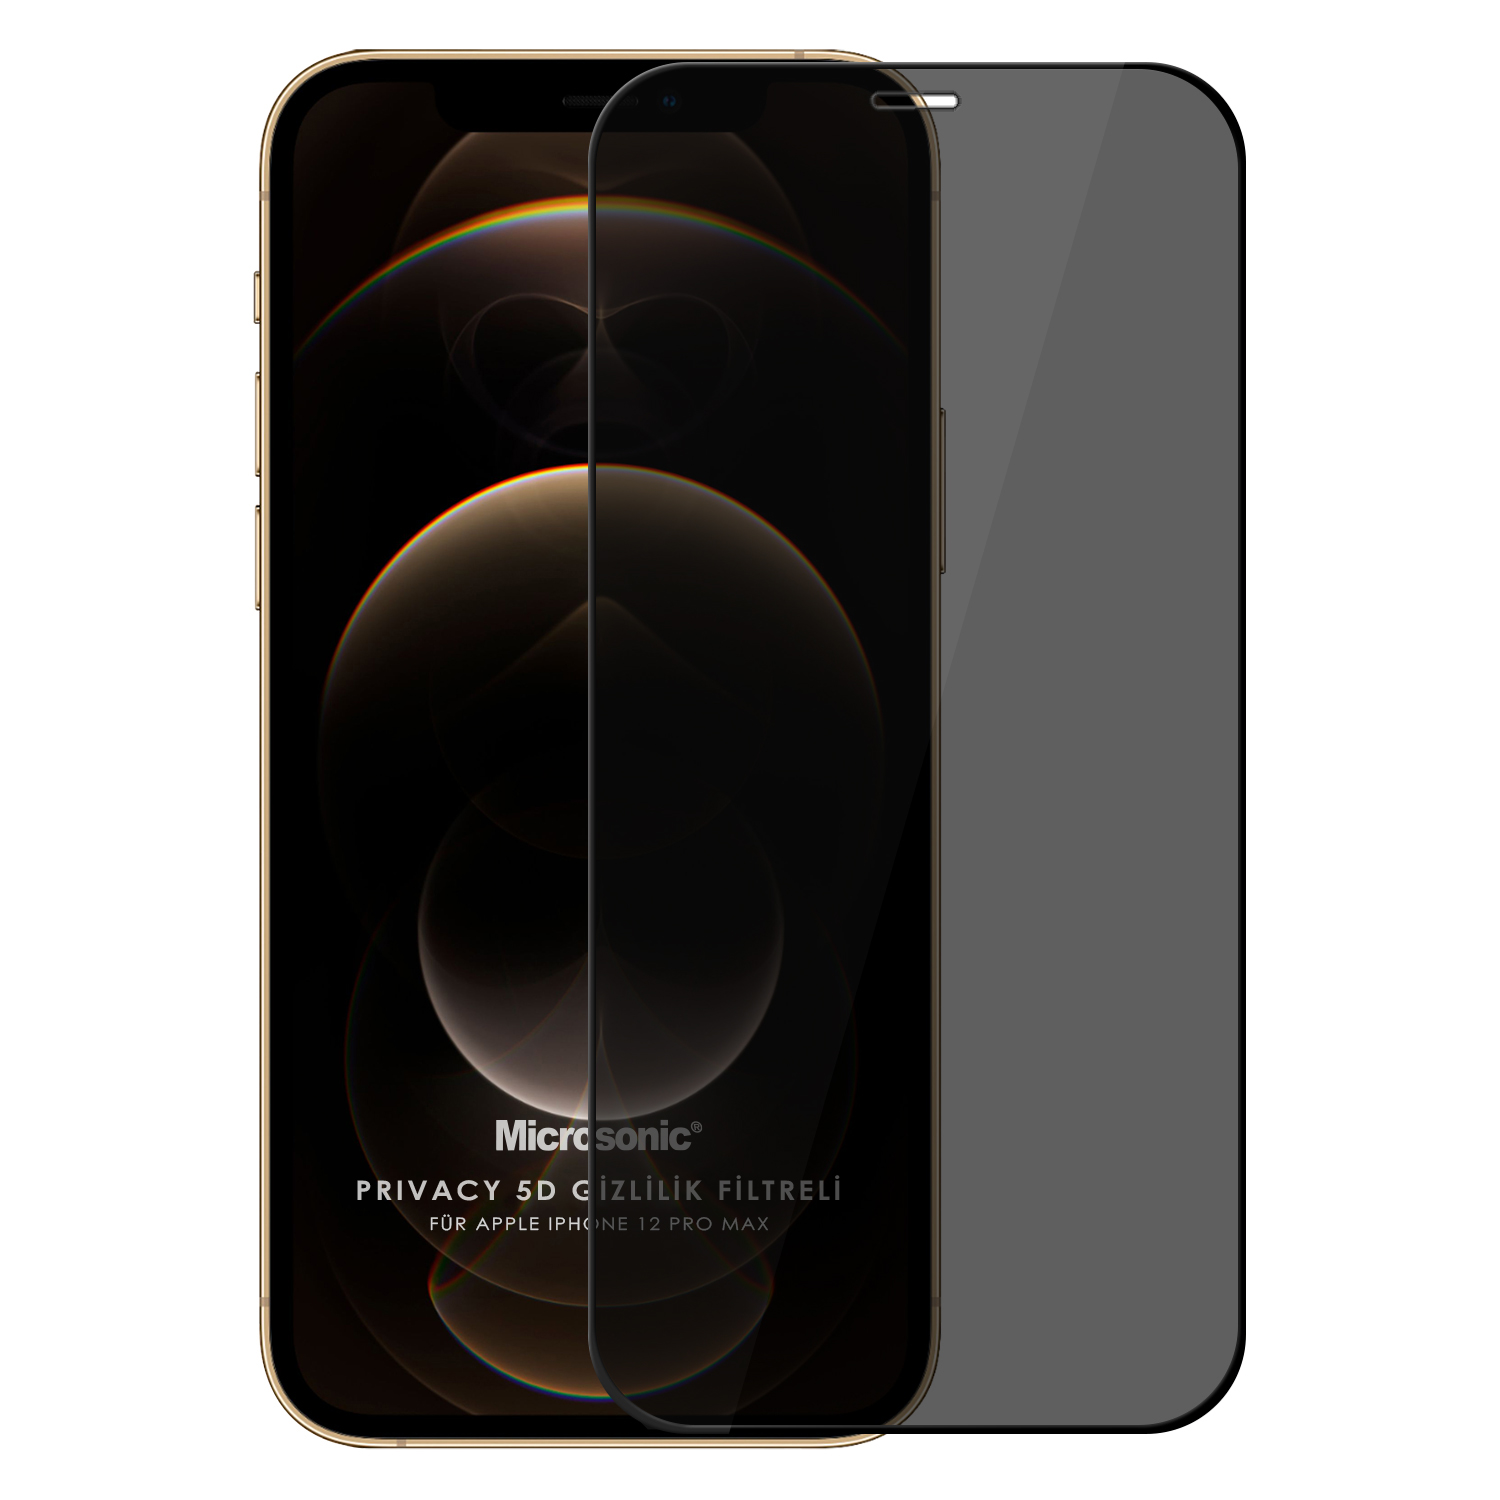 Microsonic Apple iPhone 12 Pro Max Privacy 5D Gizlilik Filtreli Cam Ekran Koruyucu Siyah